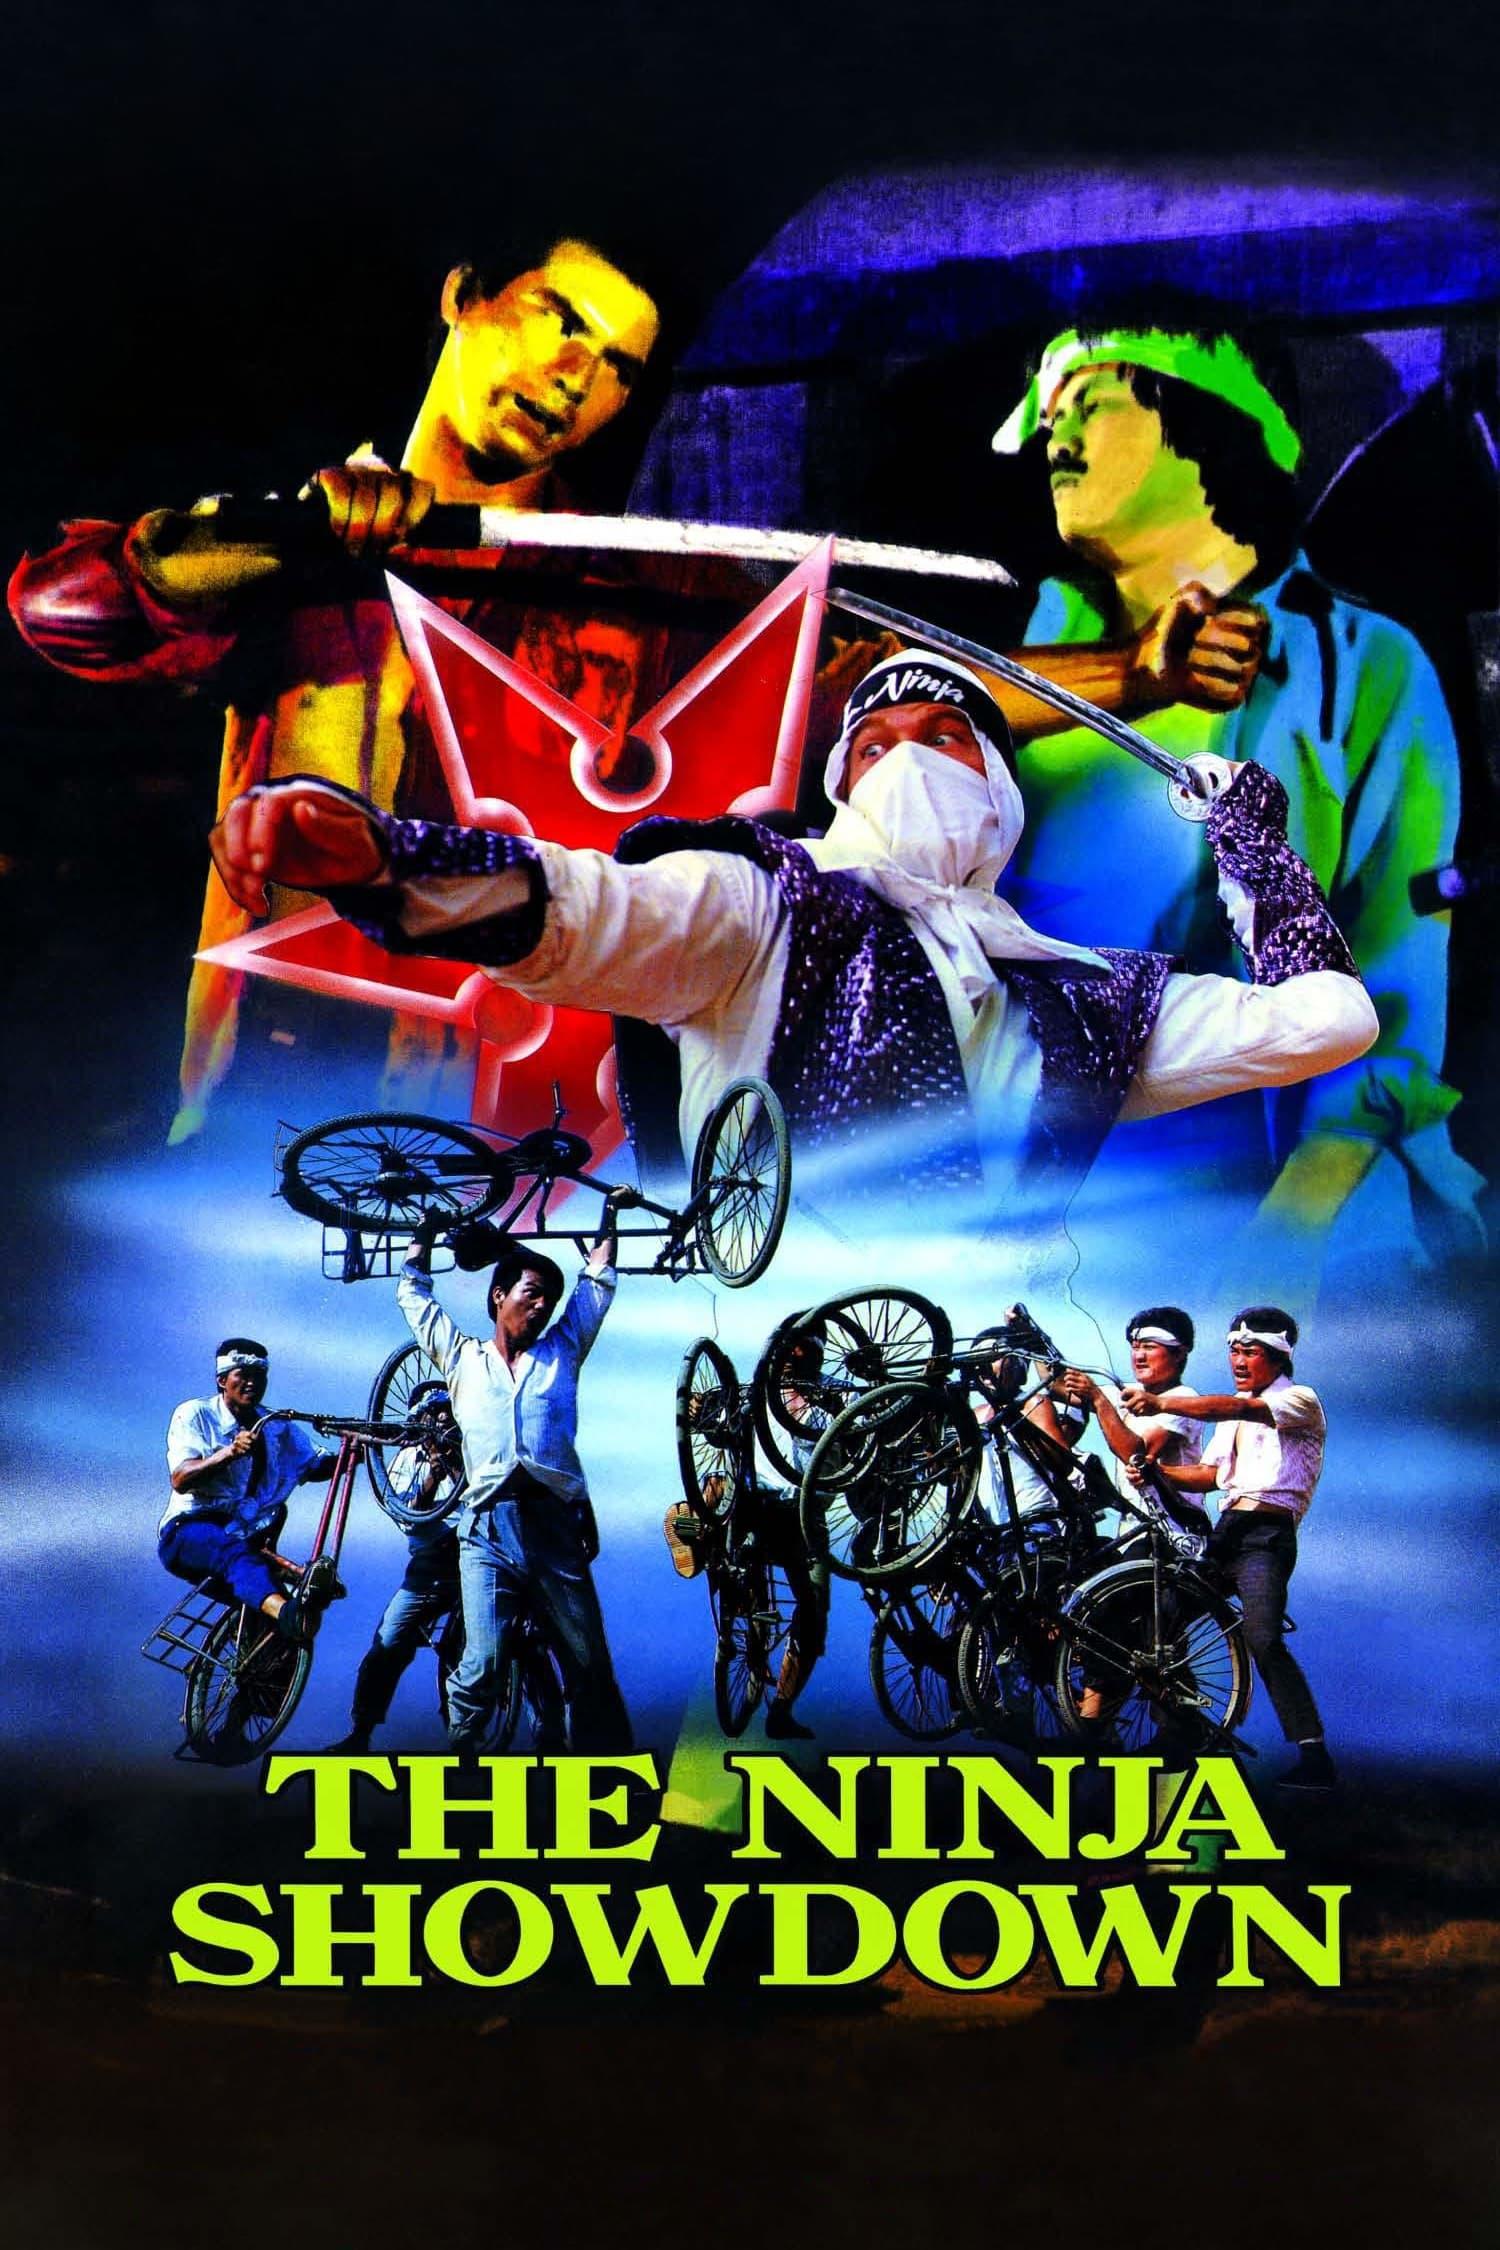 The Ninja Showdown poster